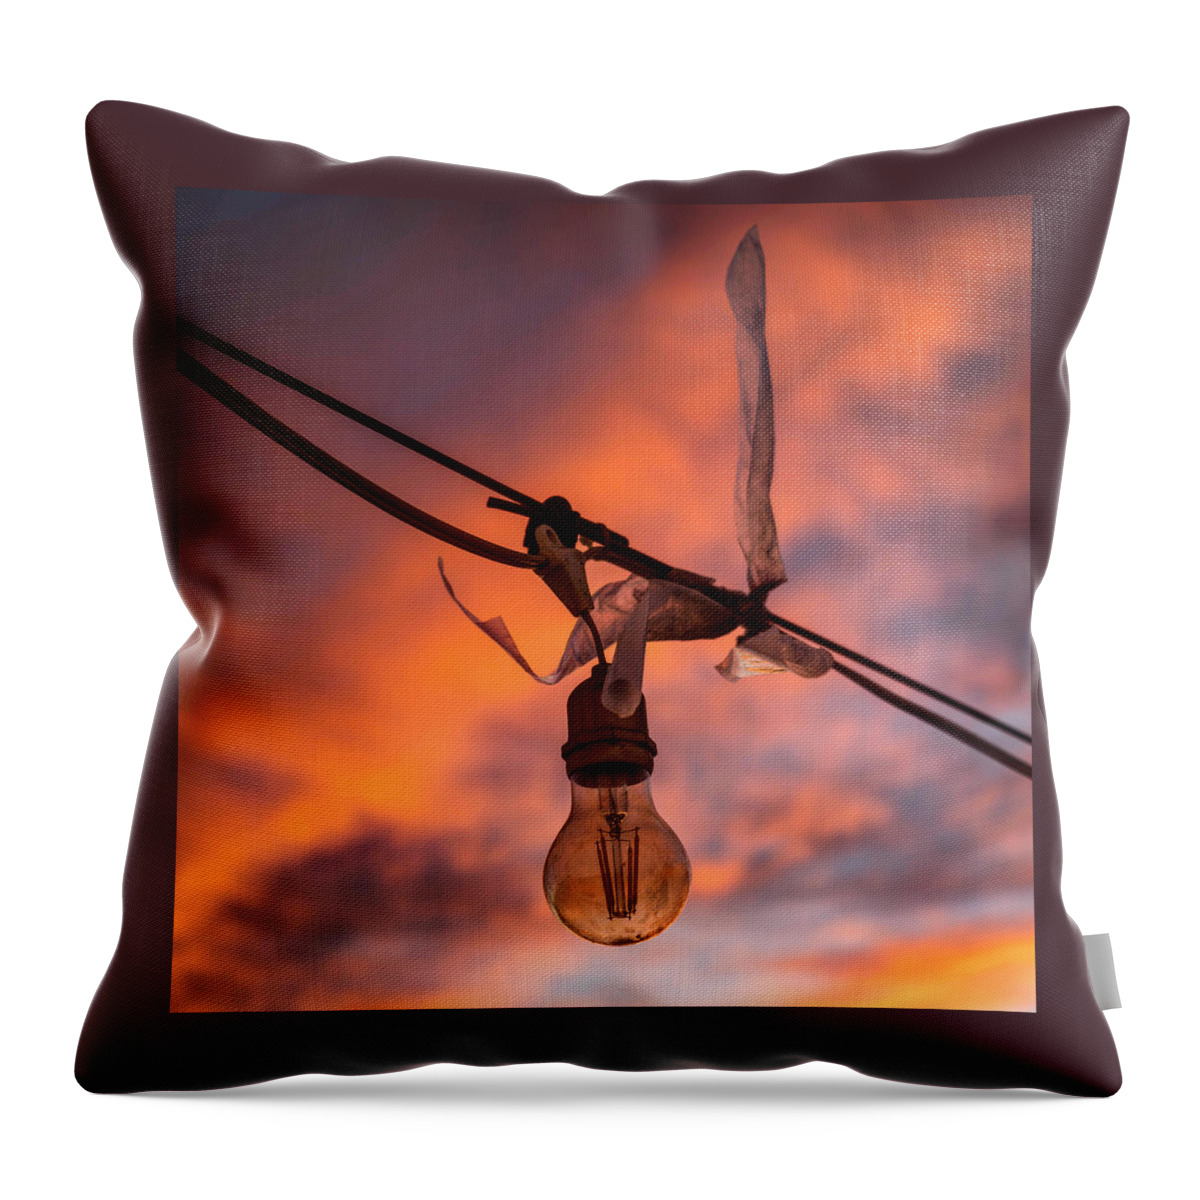 Lightbulb Throw Pillow featuring the photograph Malibu Light by Chris Goldberg